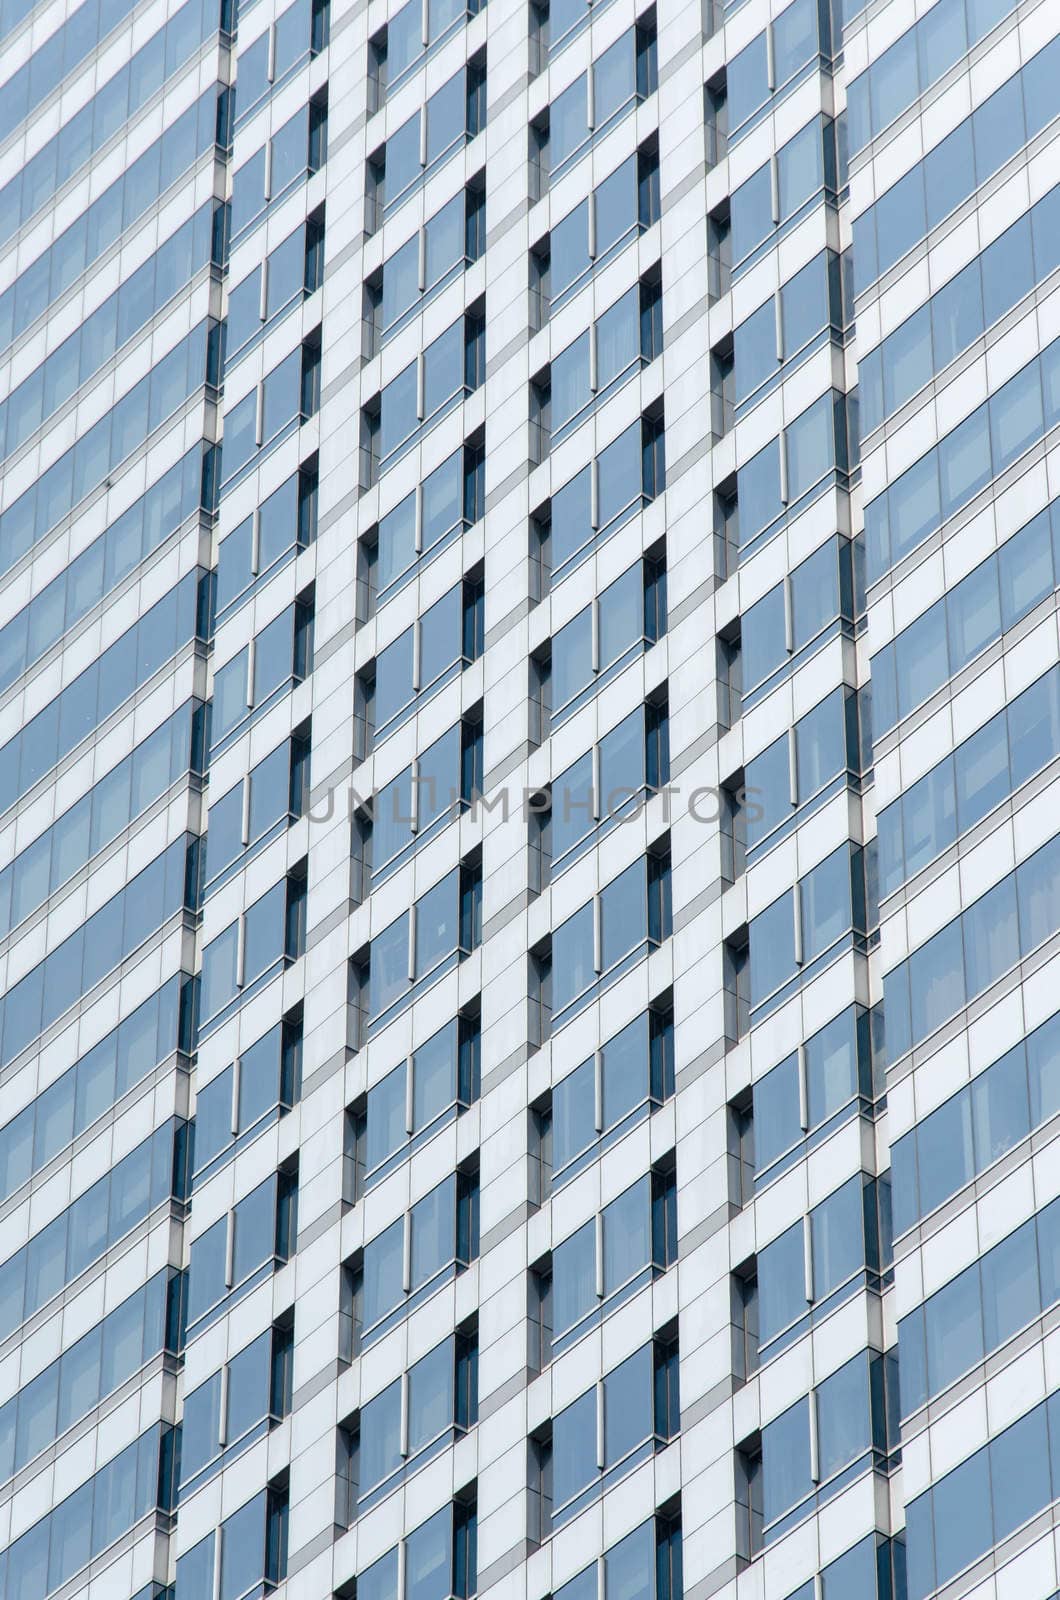 Building window by aoo3771